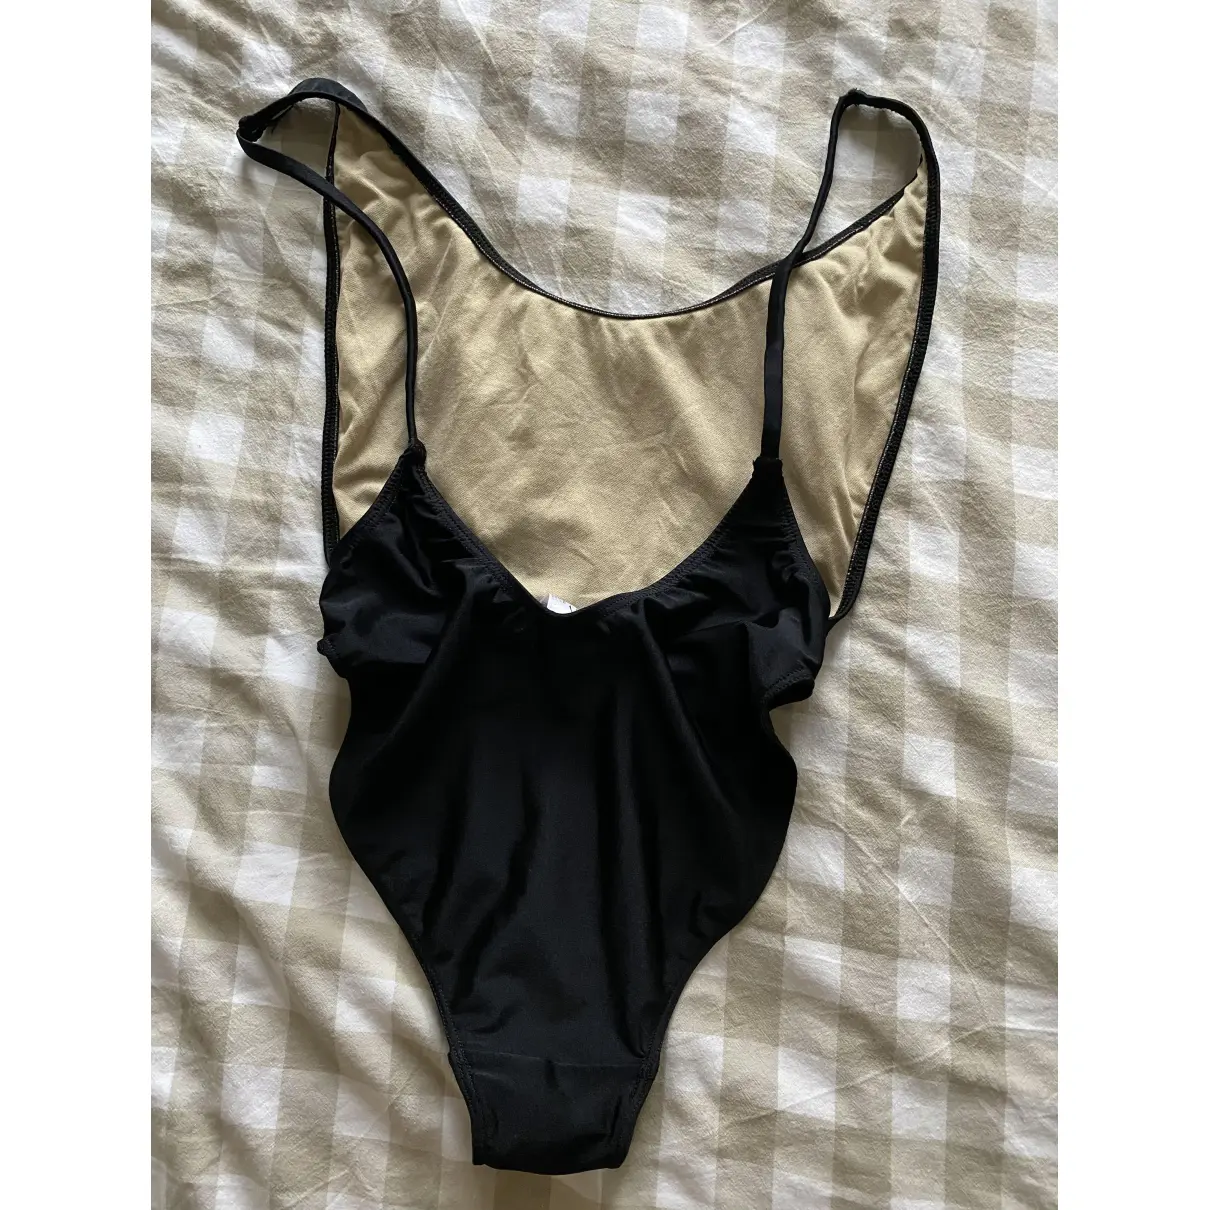 Buy American Apparel One-piece swimsuit online